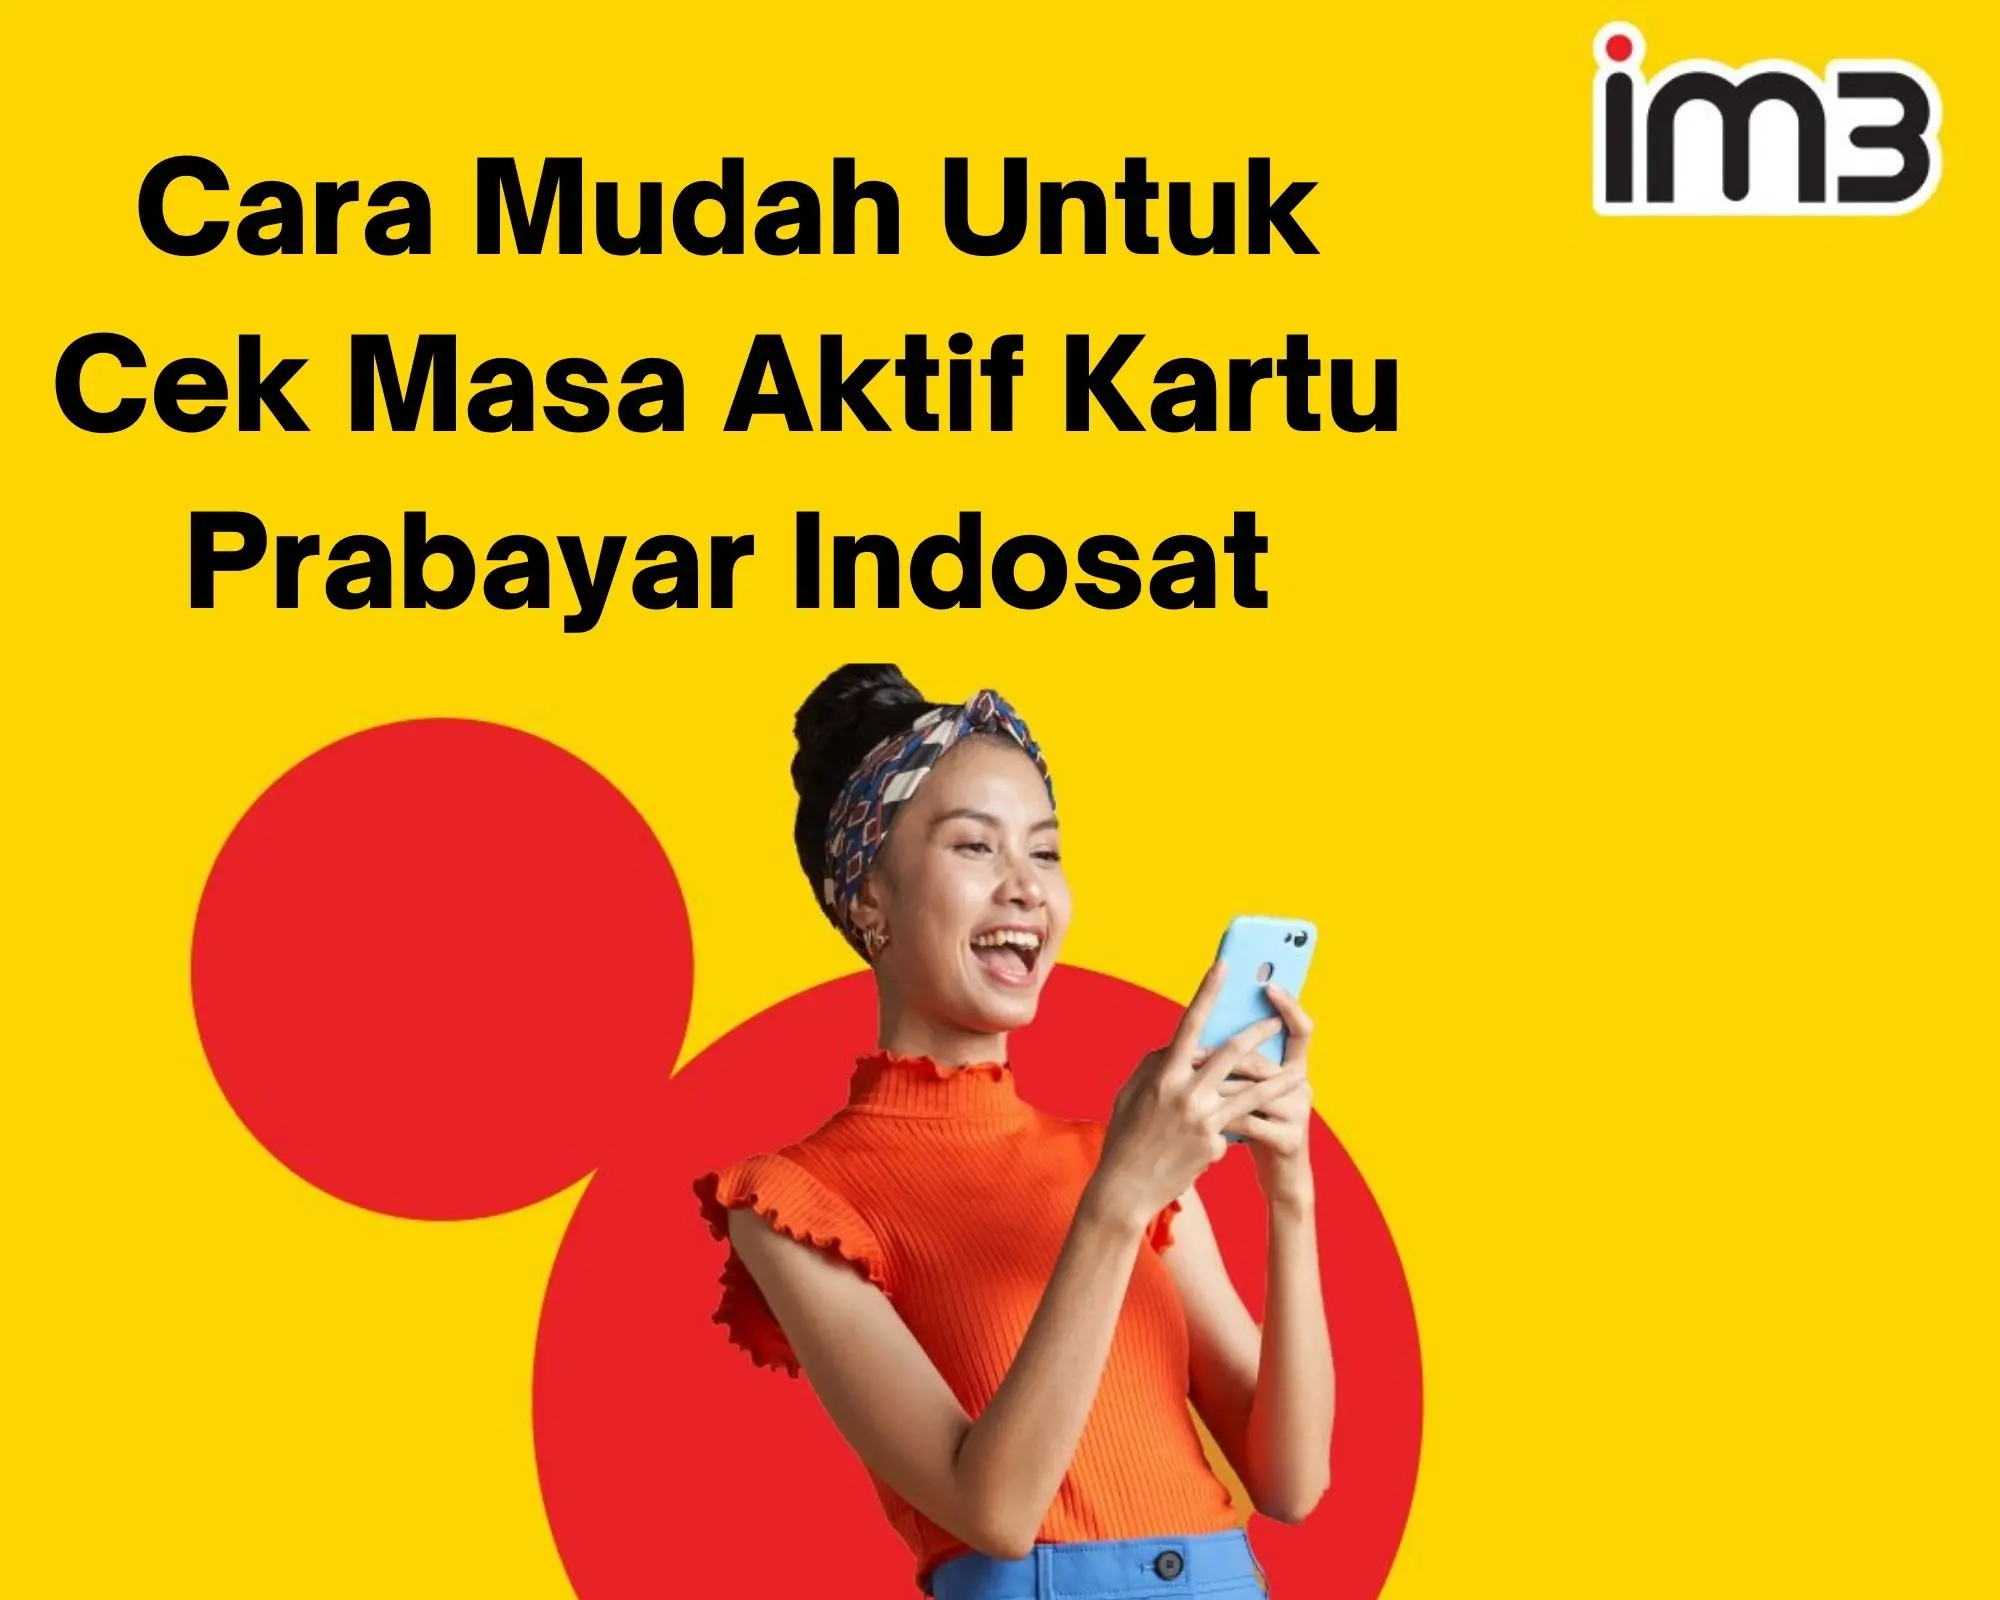 Cara Mudah Untuk Cek Masa Aktif Kartu Prabayar Indosat